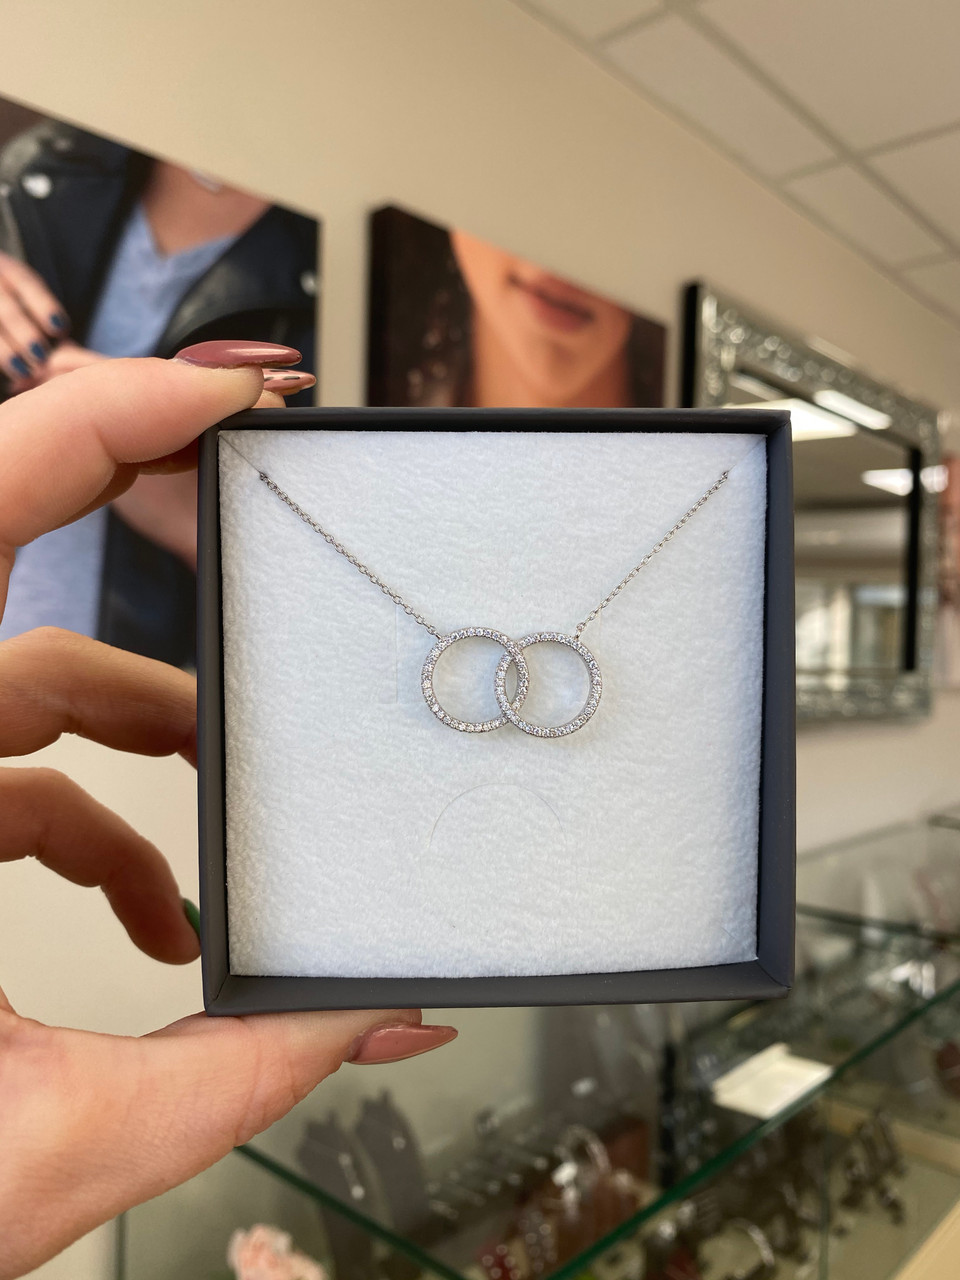 Interlocking Linked Circles Necklace - 14K Solid Gold – Grayling